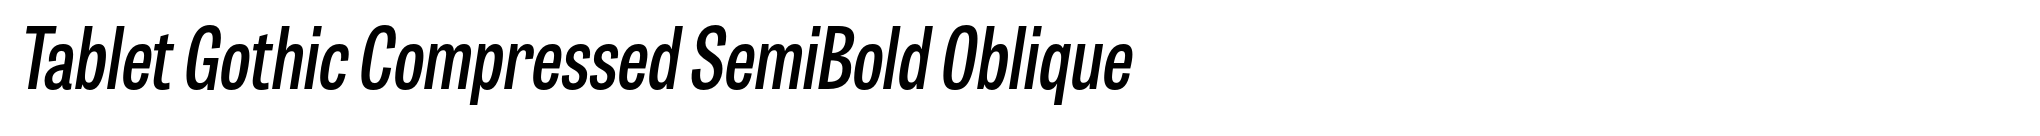 Tablet Gothic Compressed SemiBold Oblique image